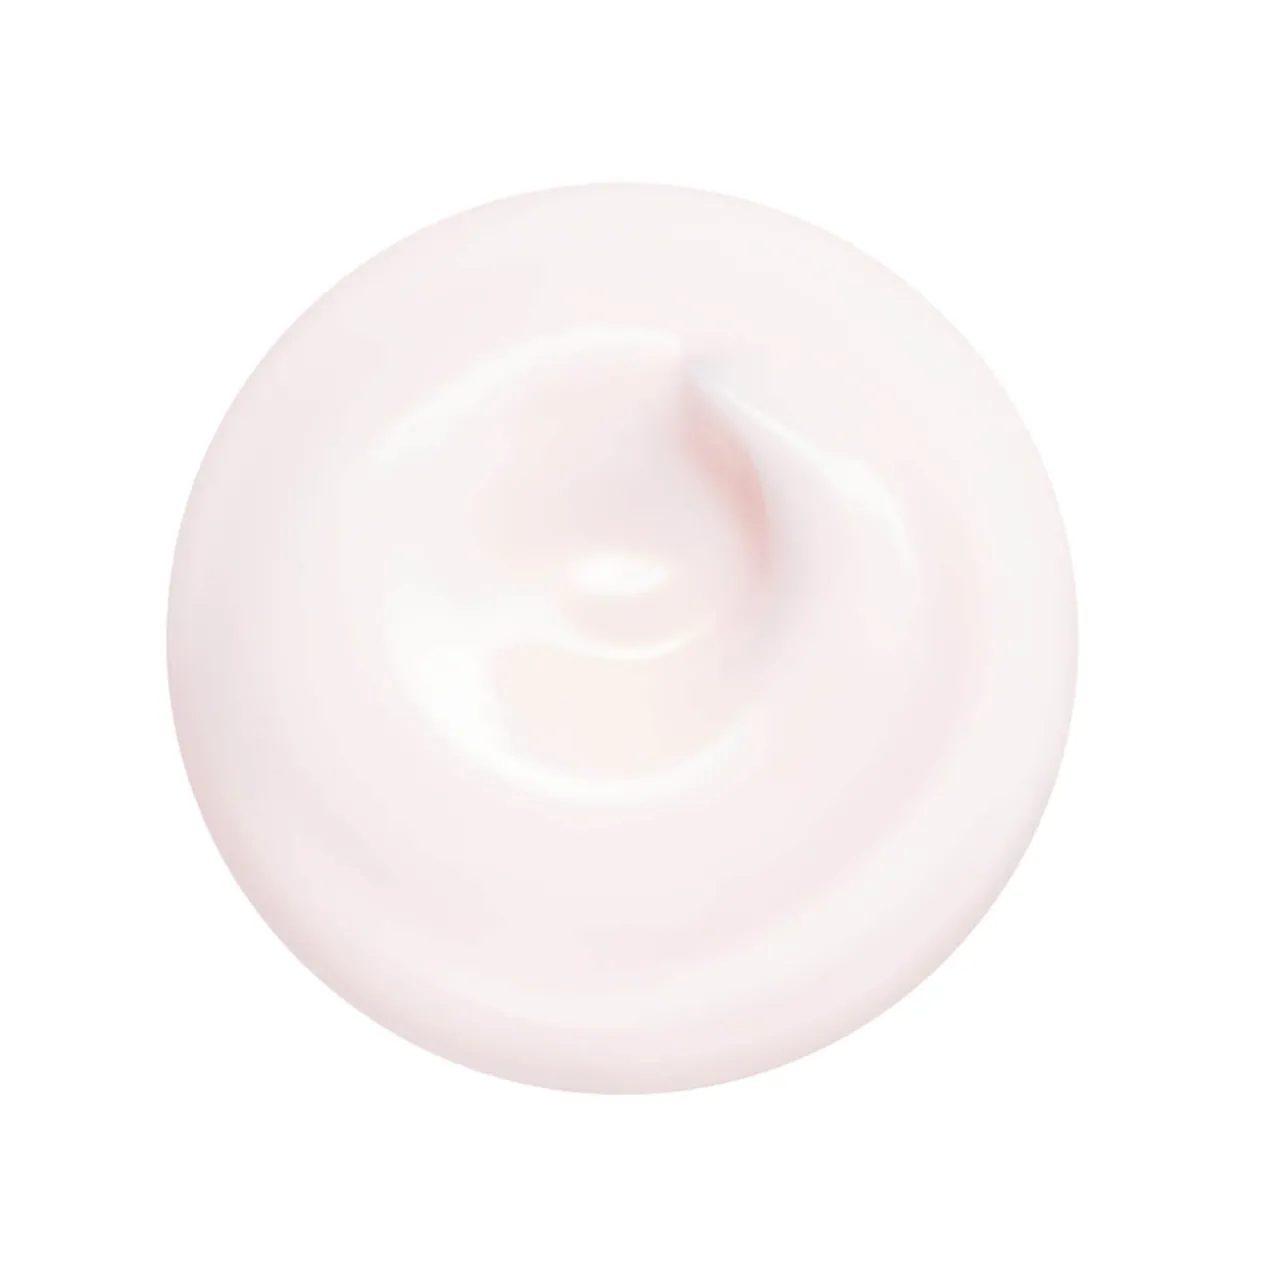 Shiseido Essential Energy Hydrating Cream 50ml